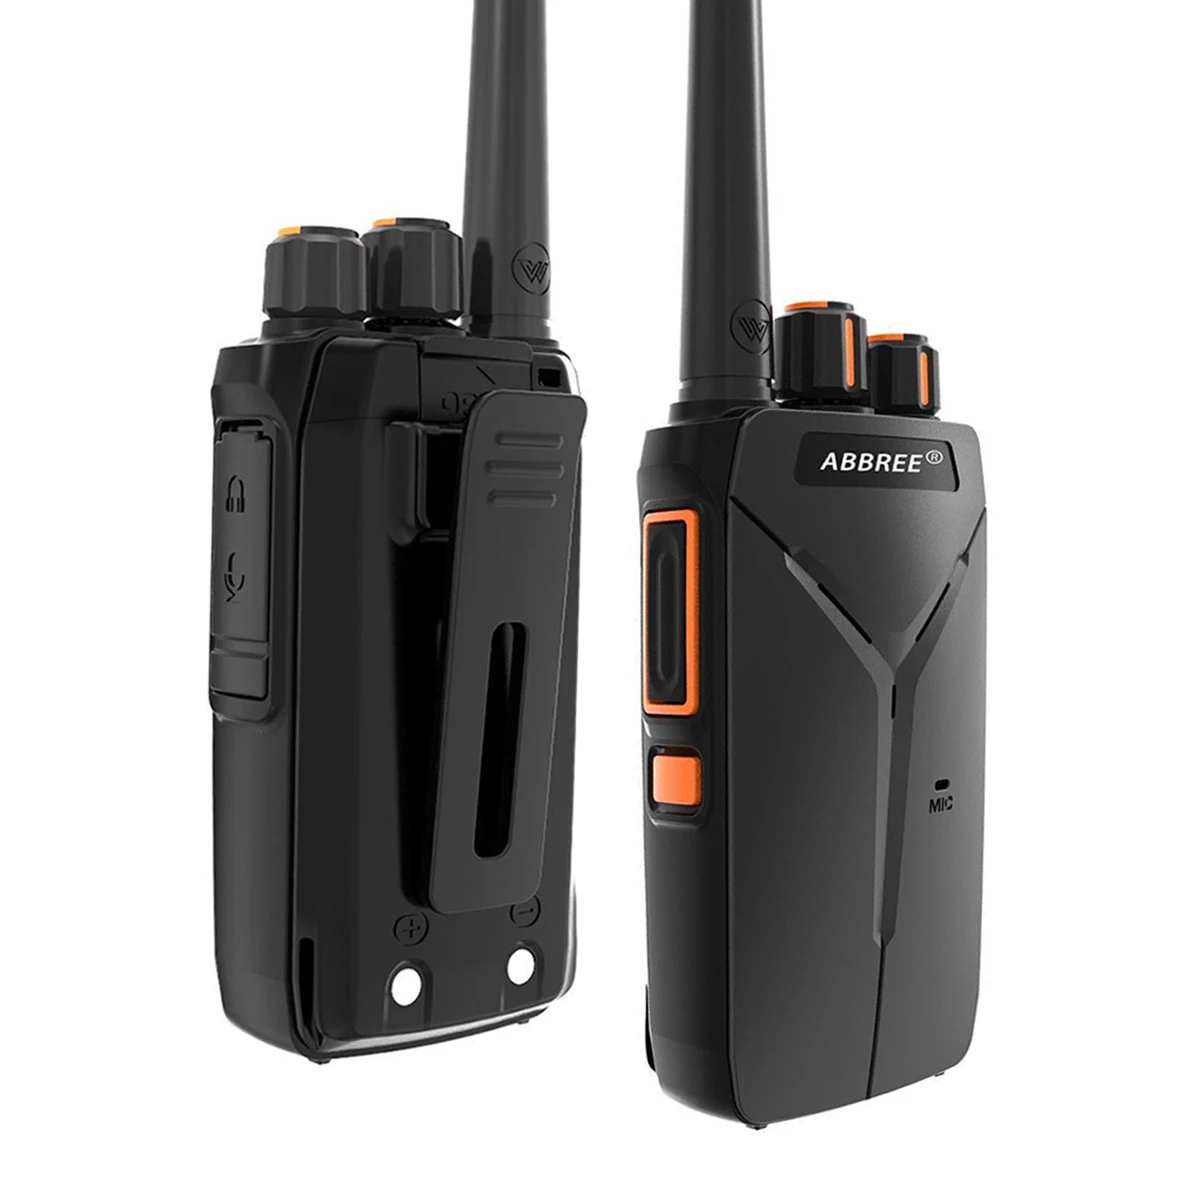 Abbree Ar-f1 Mini Walkie Talkie Portable Radio Station Uhf Band 400-480mhz Ham Radio Communicator Hf Transceiver Handheld - Walkie Talkie